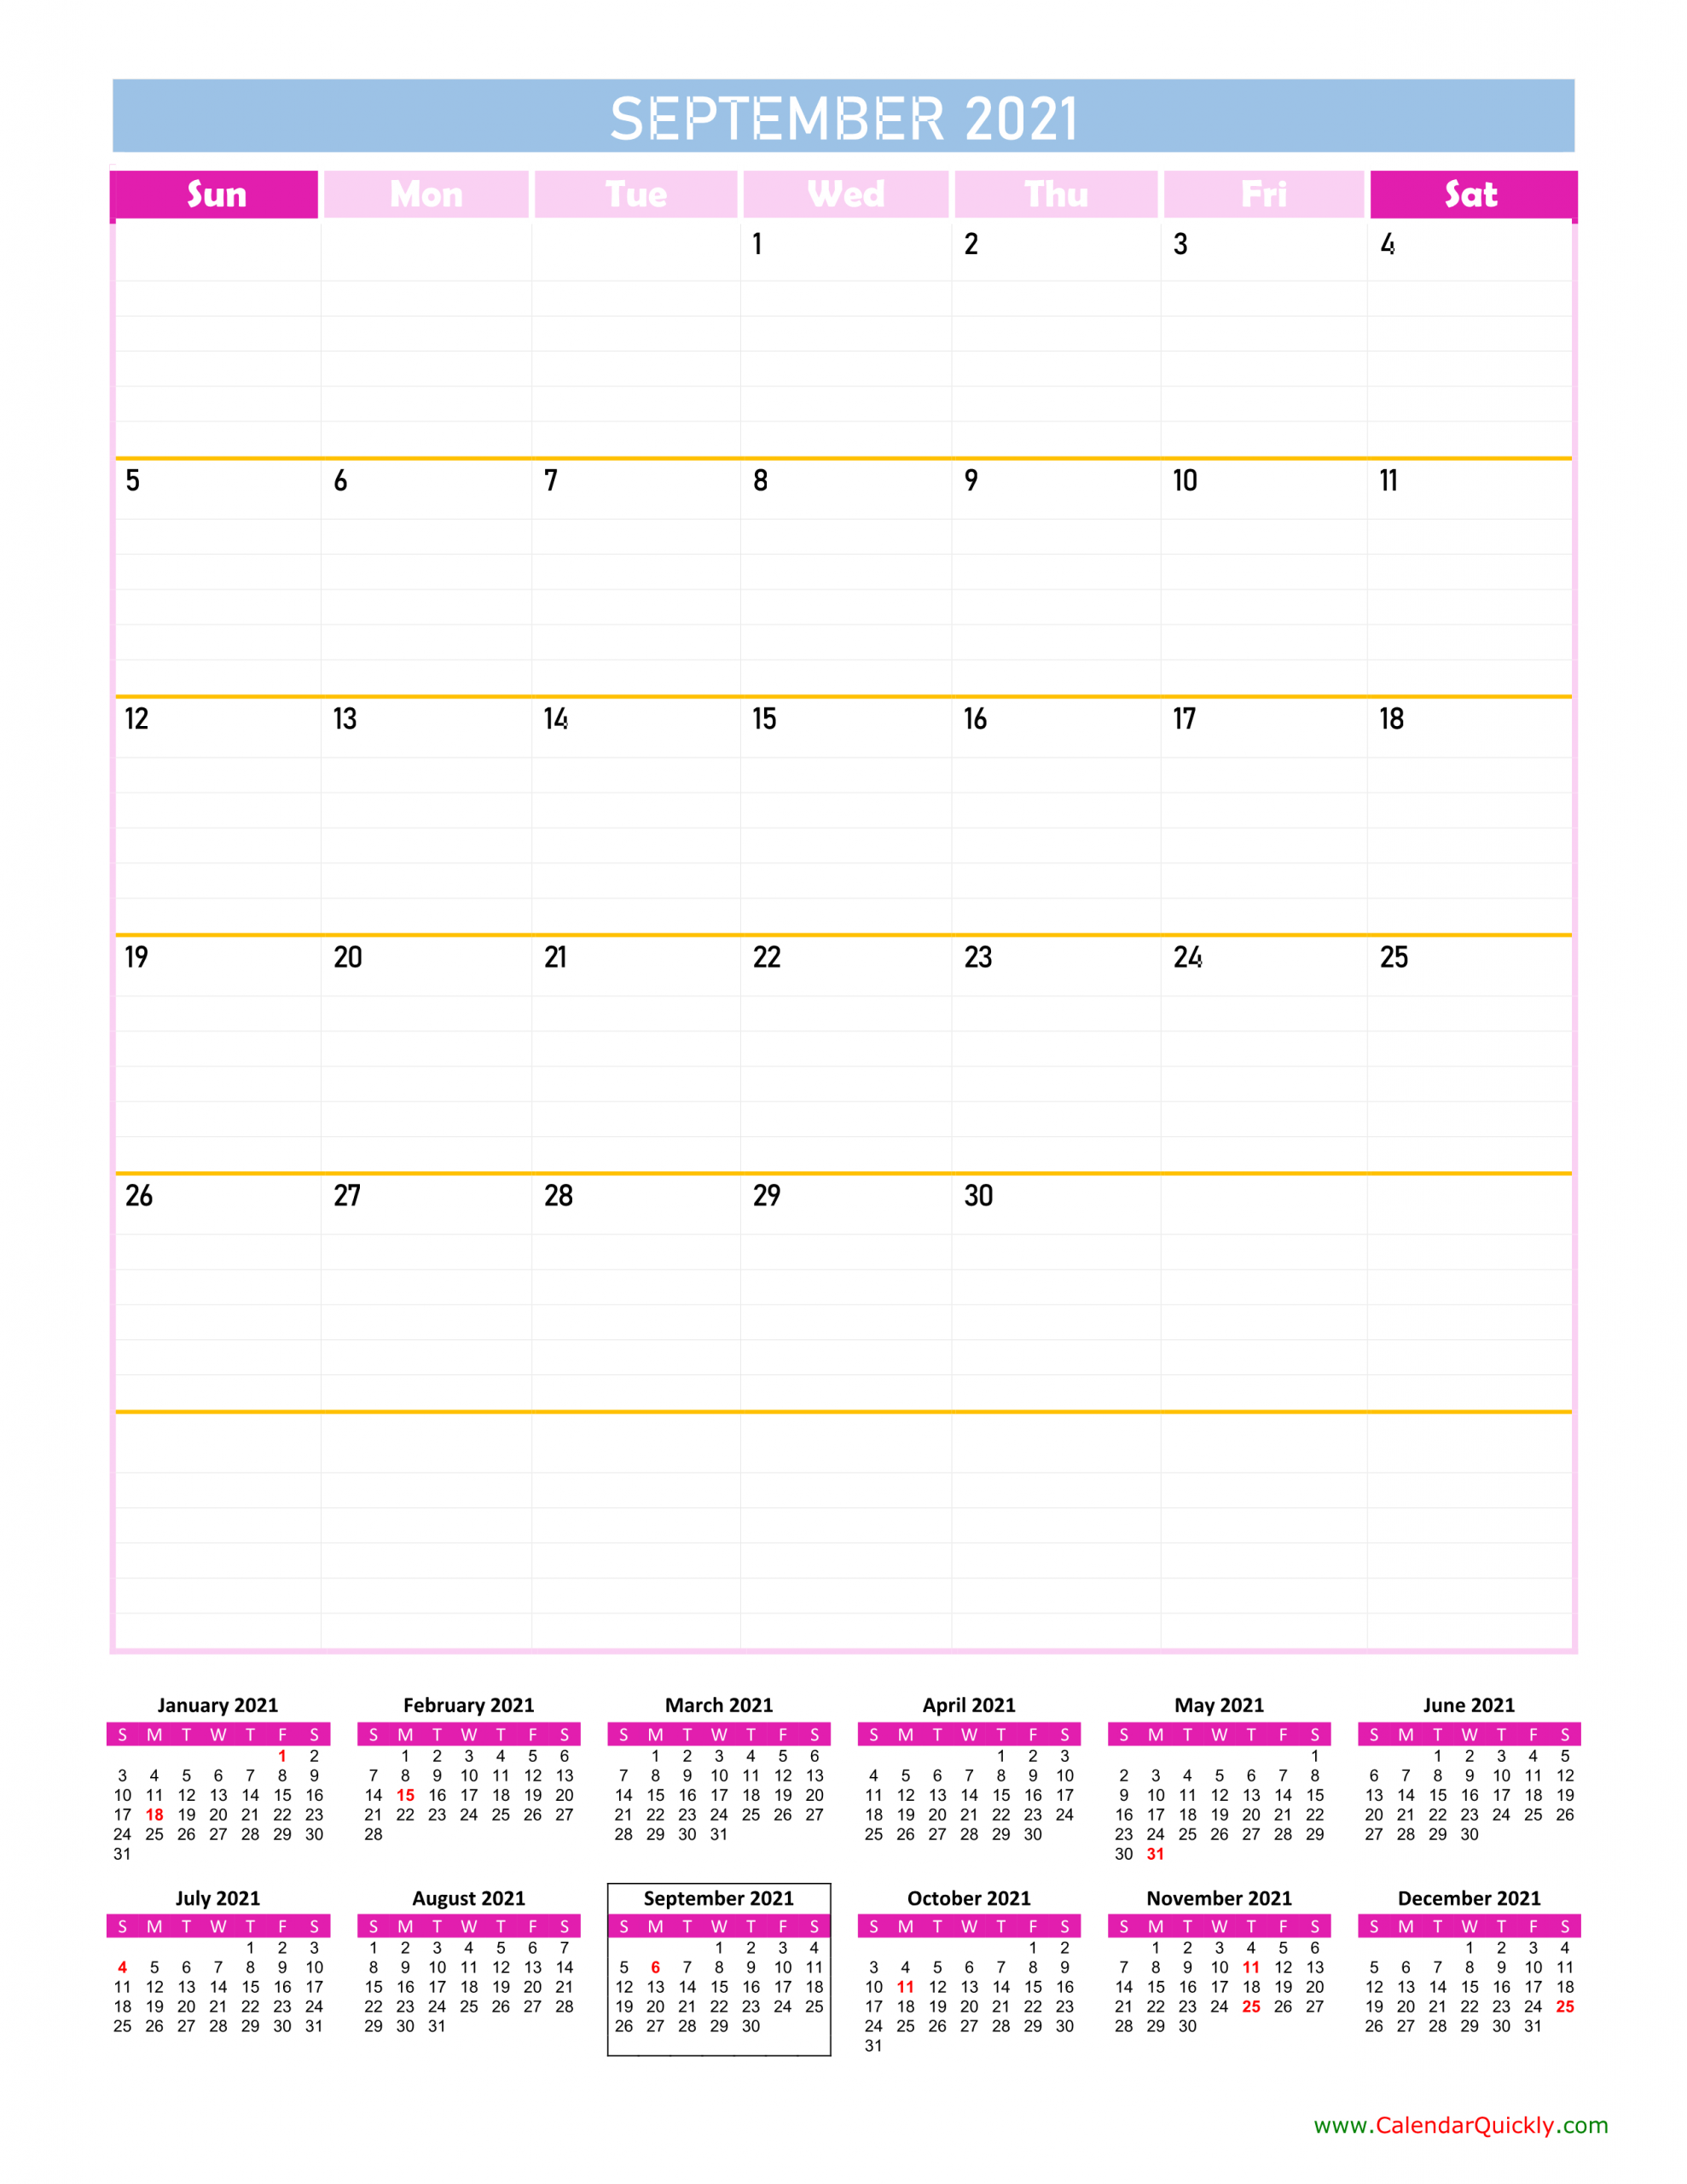 September Calendar 2021 Vertical | Calendar Quickly